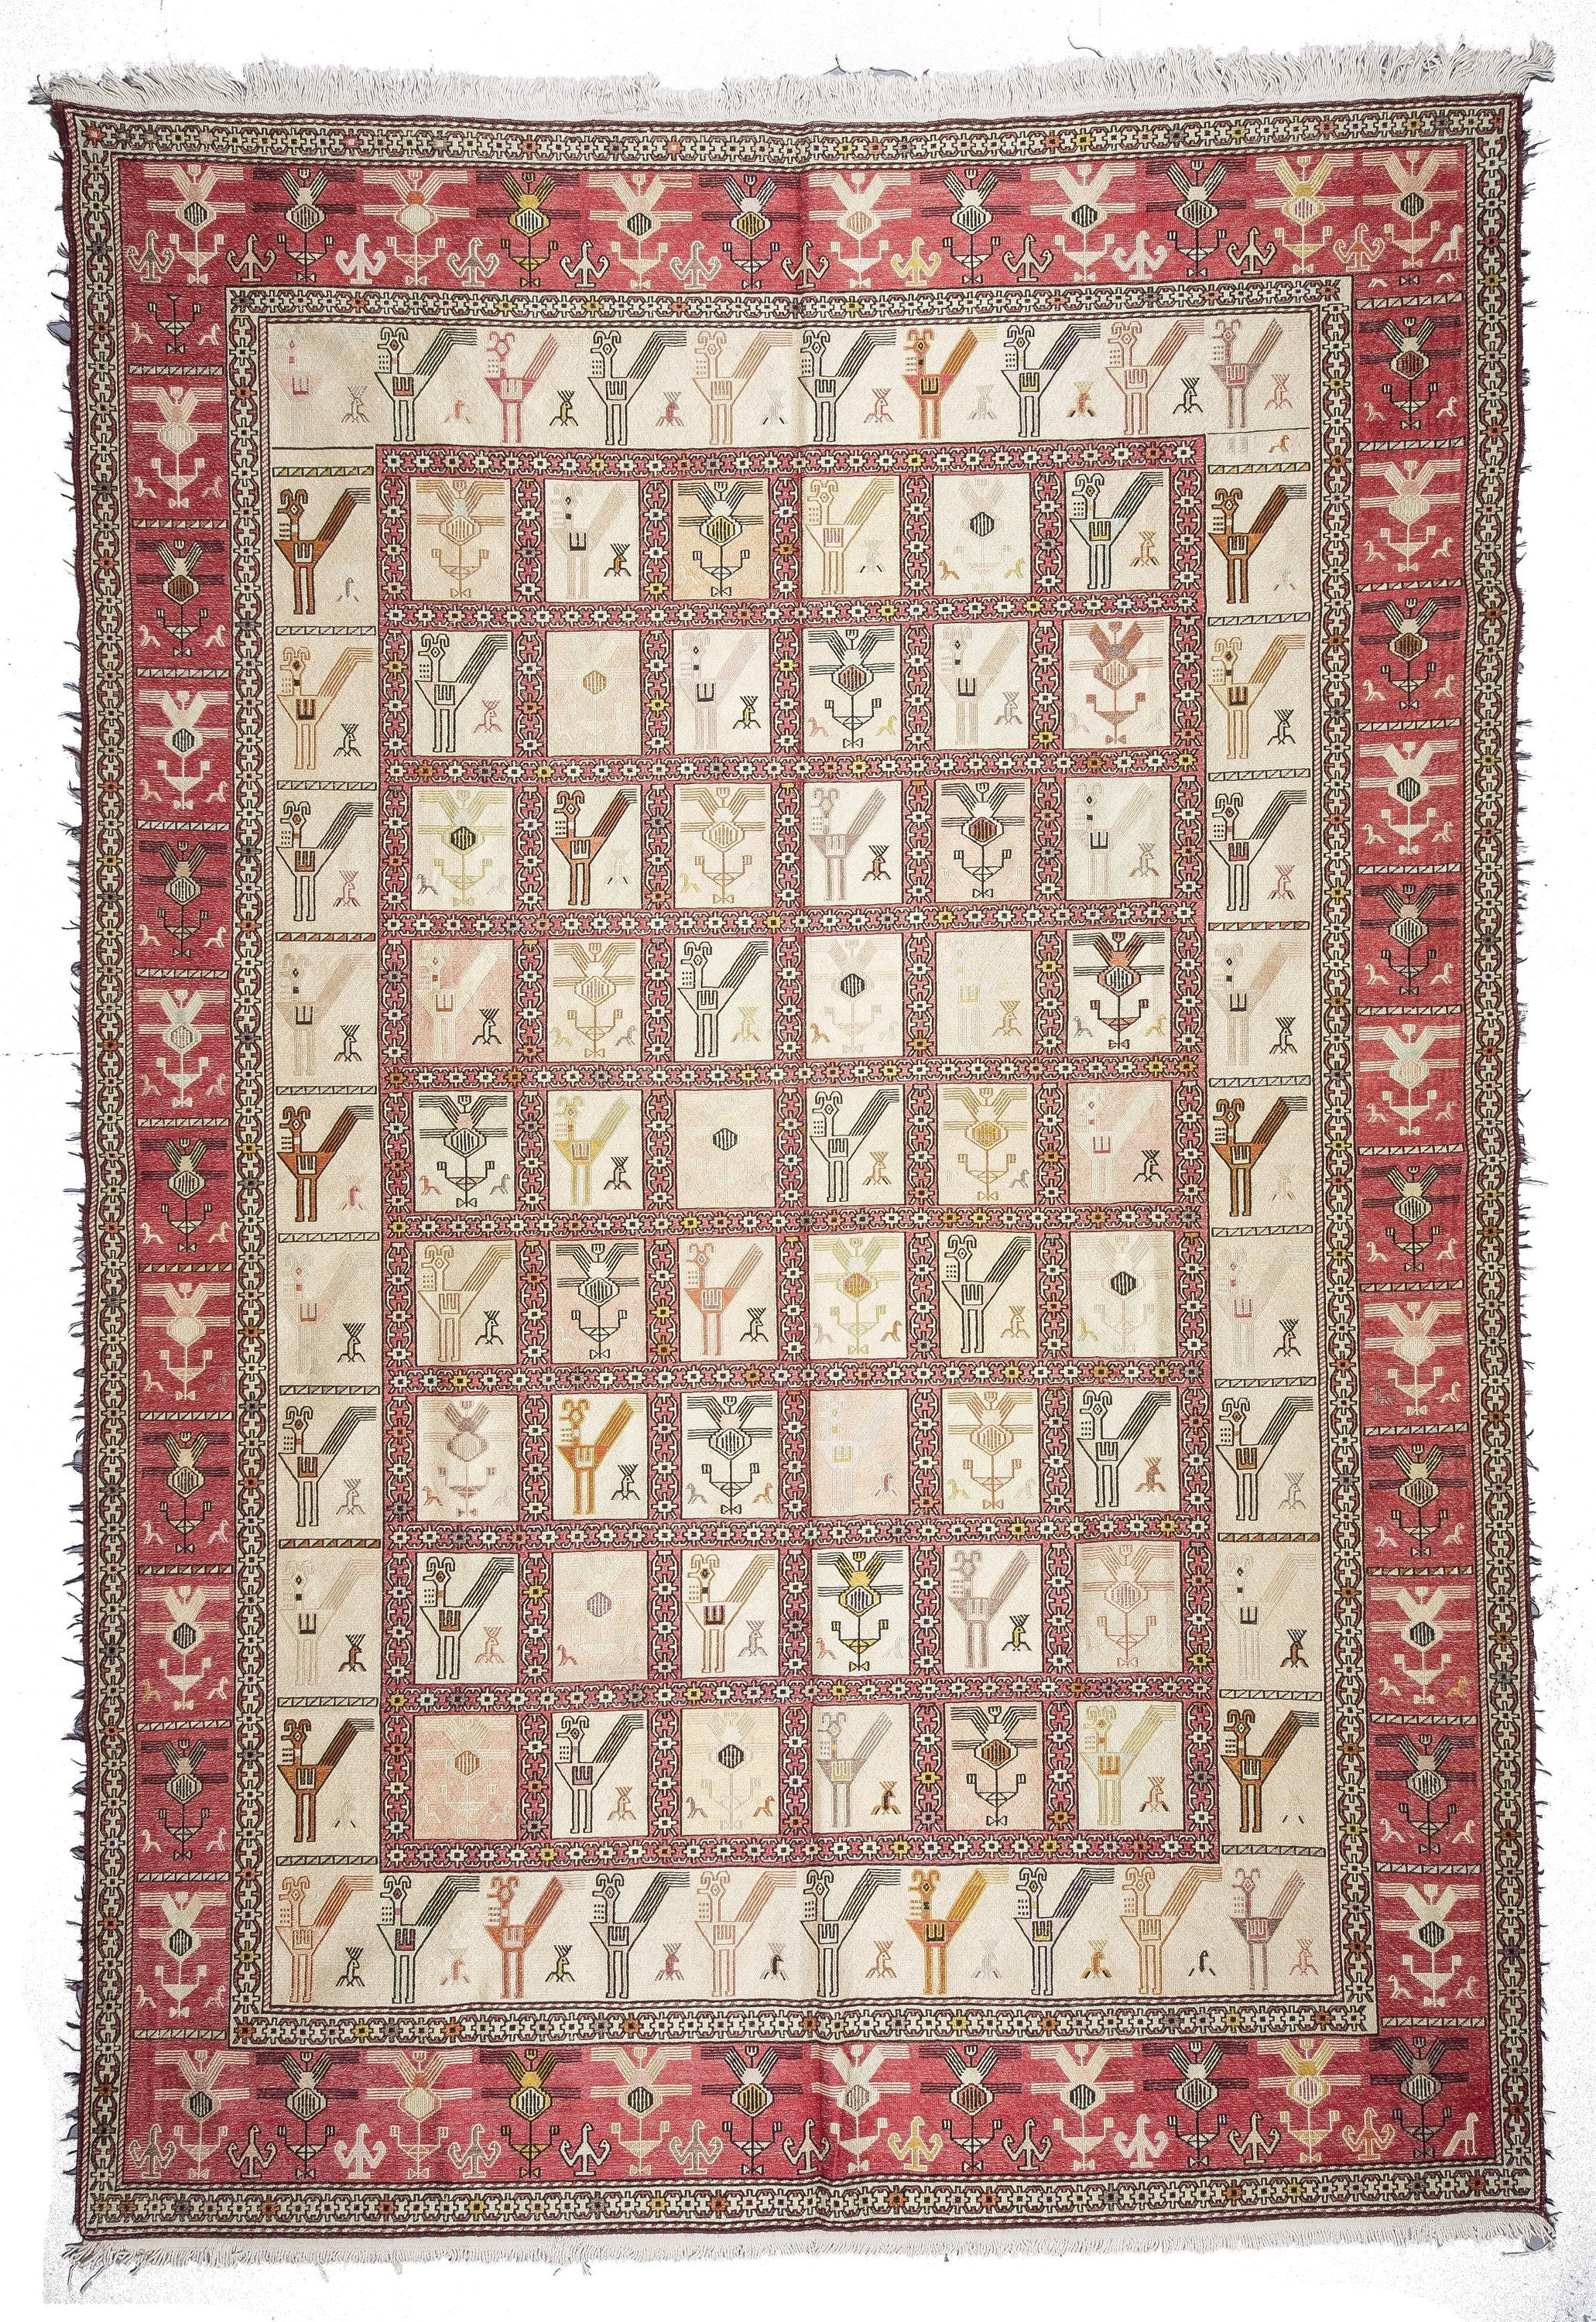 Turkish Kilim Rug, 9 x 6 ft Red and Cream Natural Wool Cotton and Silk Shasaver Soumak Rug